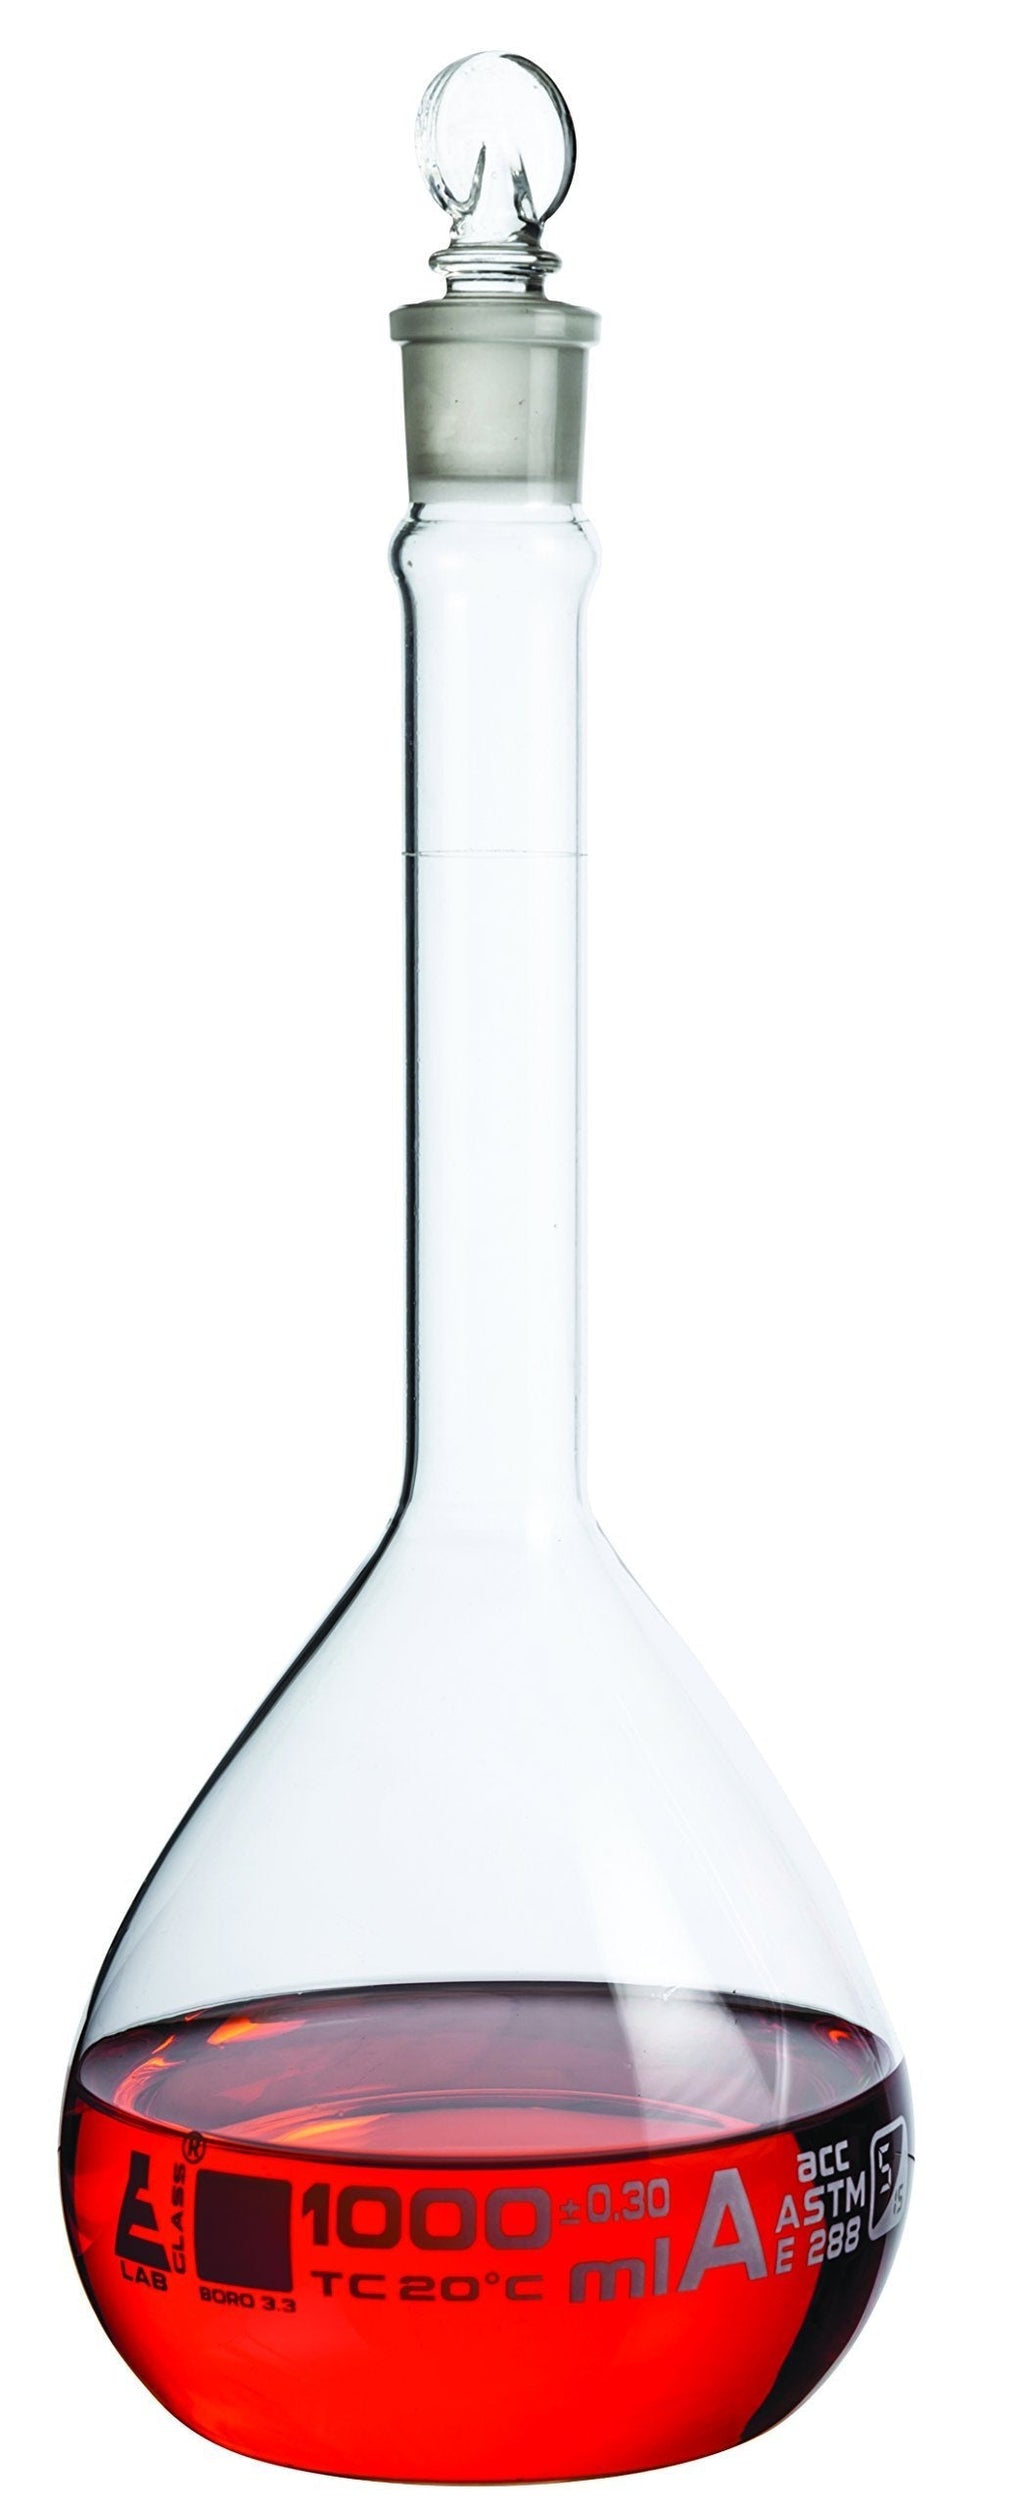 Volumetric Flask, 1000ml - Class A, ASTM - Tolerance ±0.300 ml - Glass Stopper - Single, White Graduation - Eisco Labs - LeoForward Australia